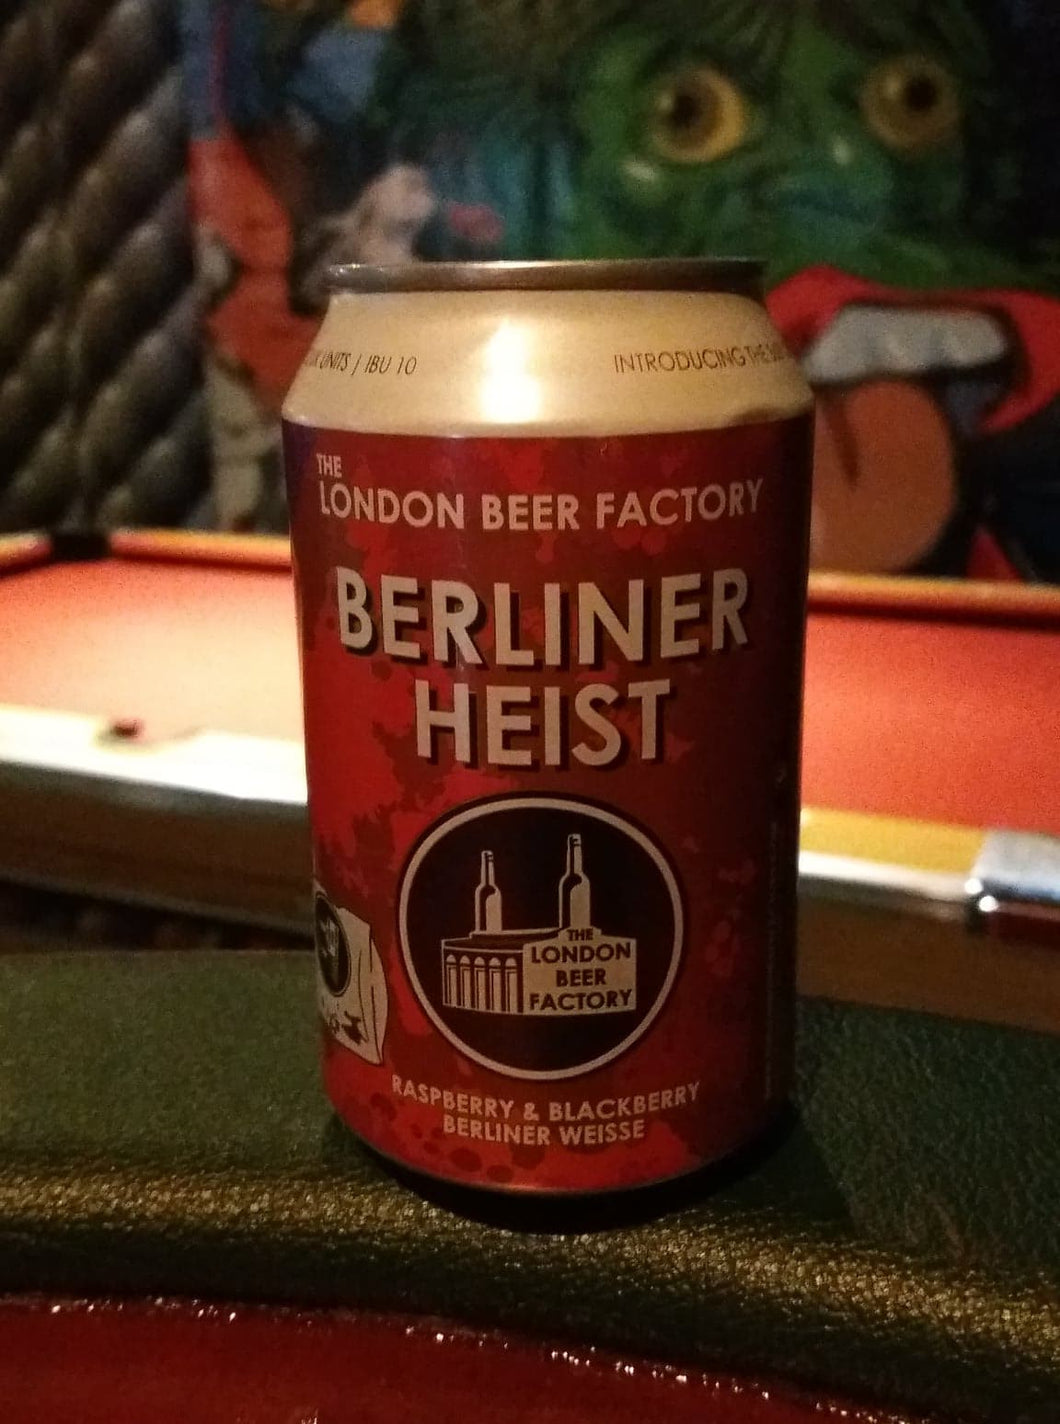 The London Beer Factory Berliner Heist